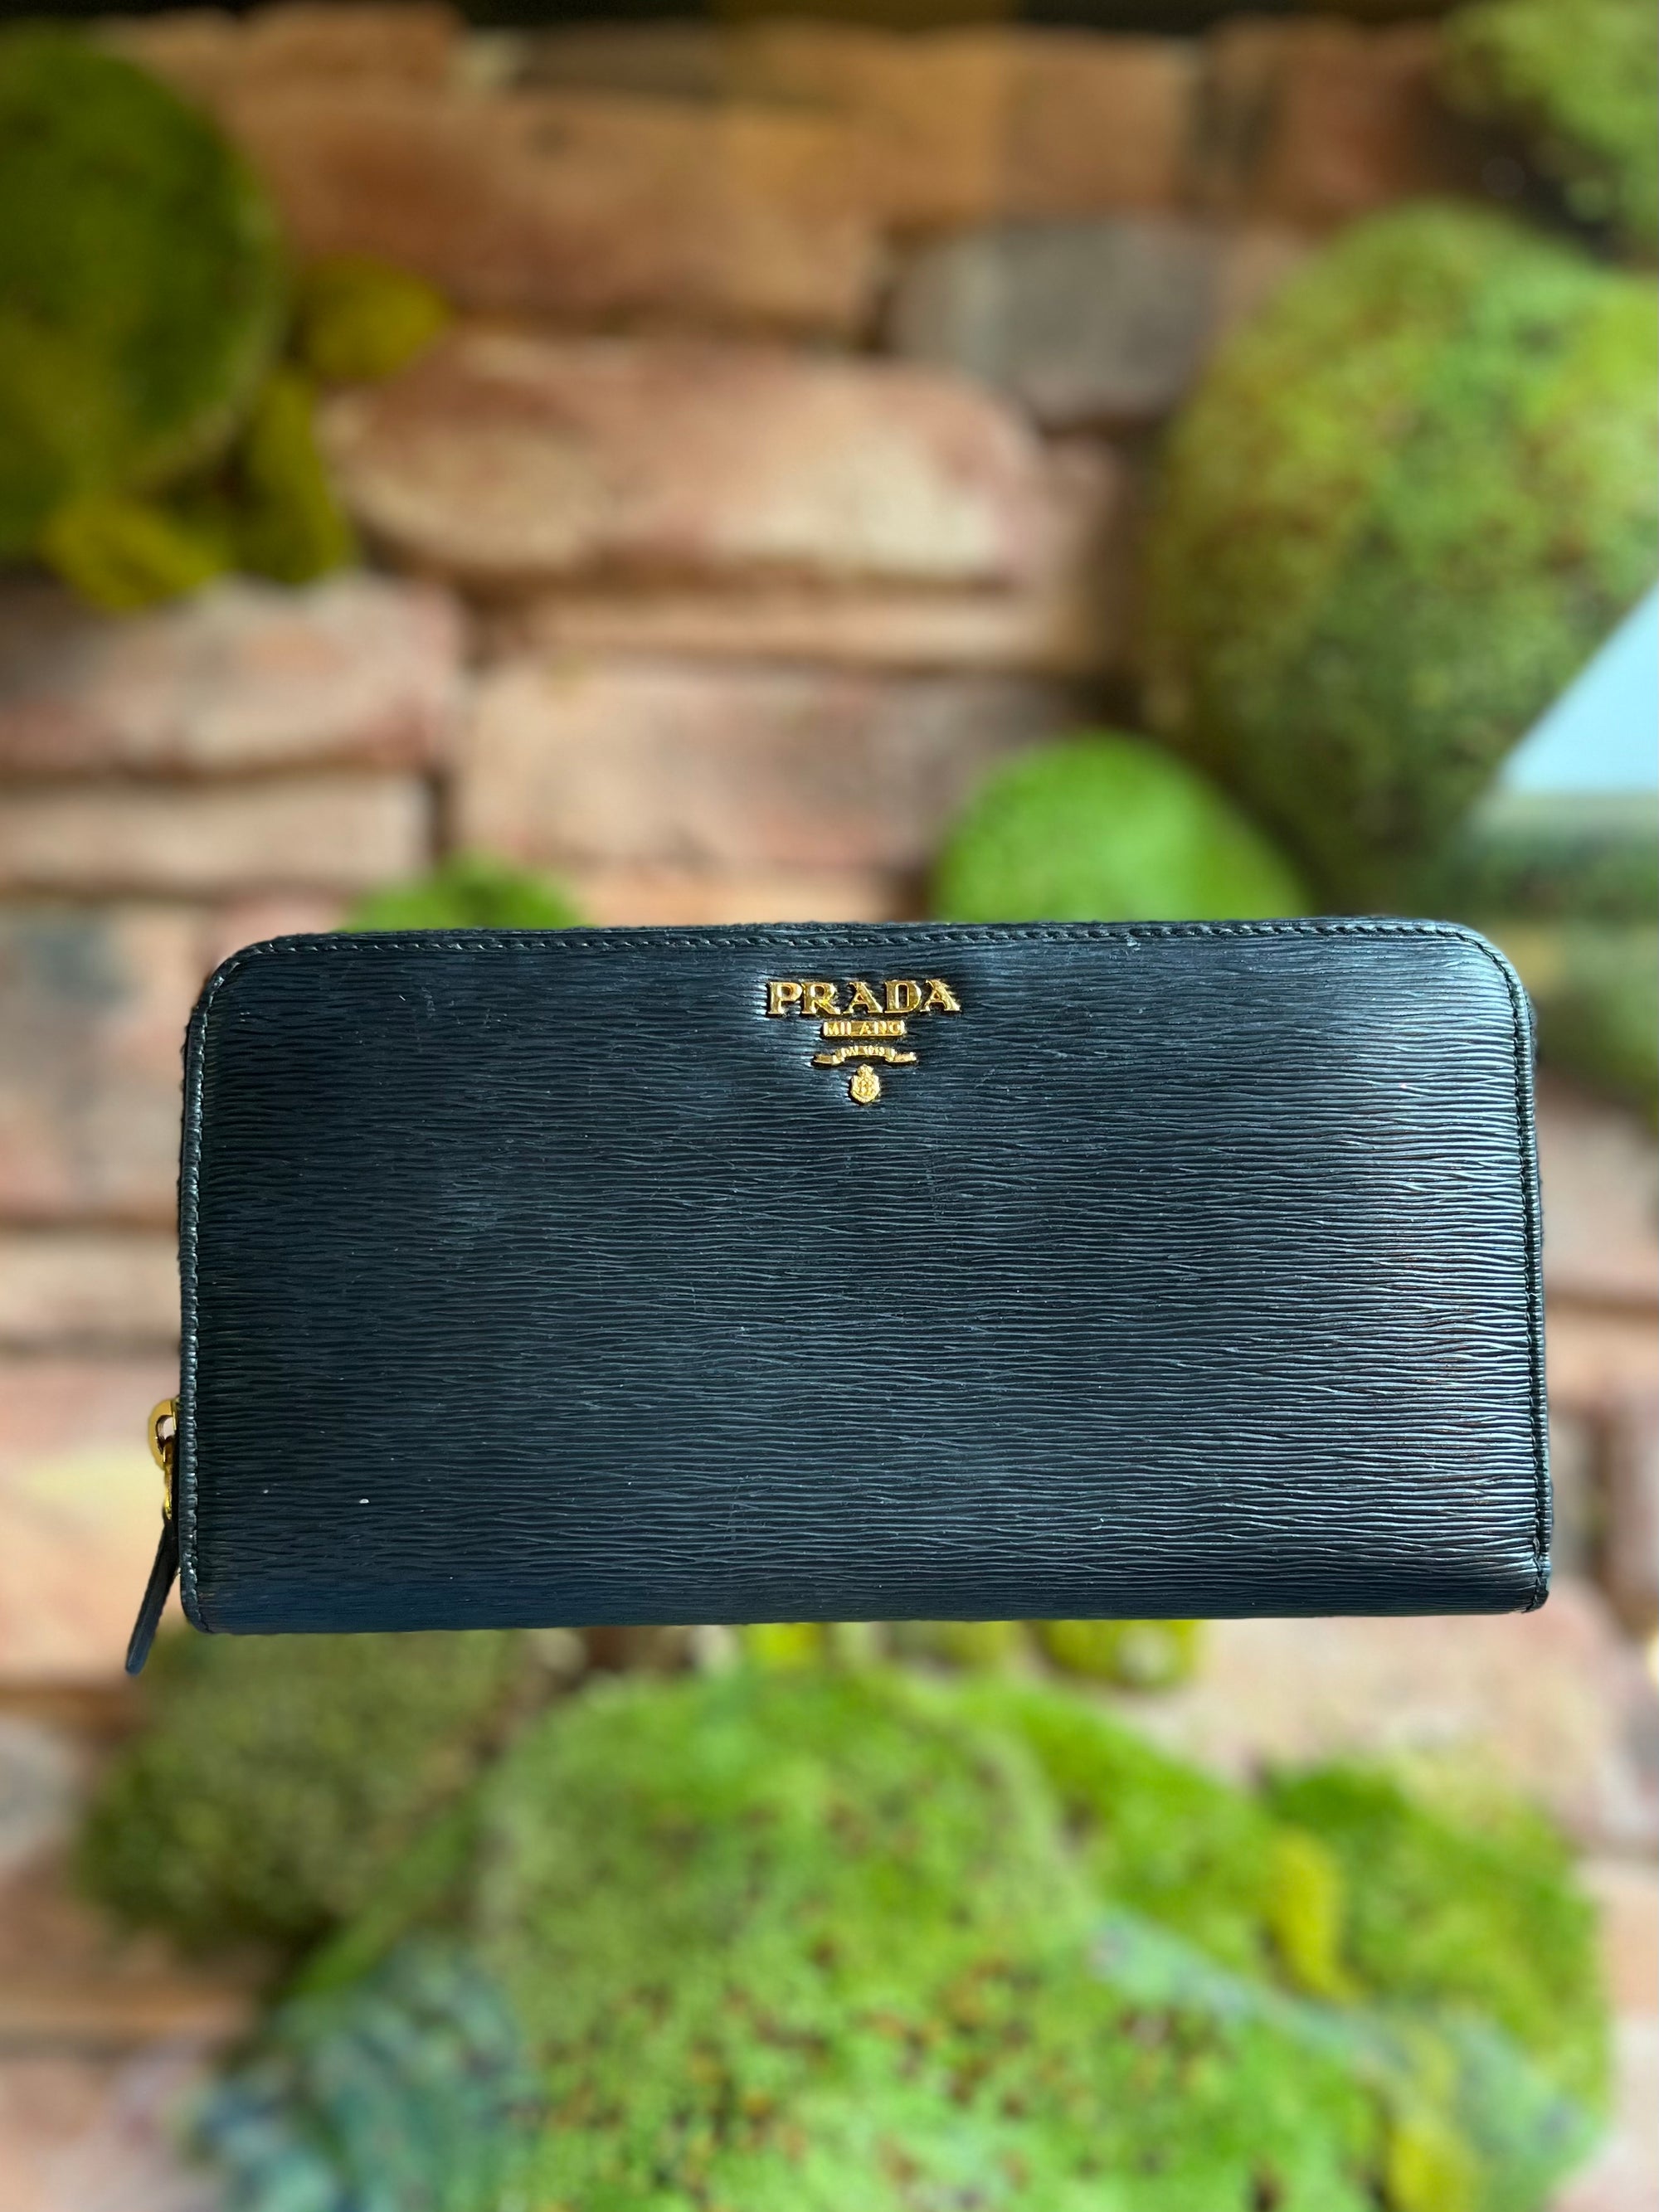 Authentic Prada Saffiano Leather Large Purse Wallets Black PRADA